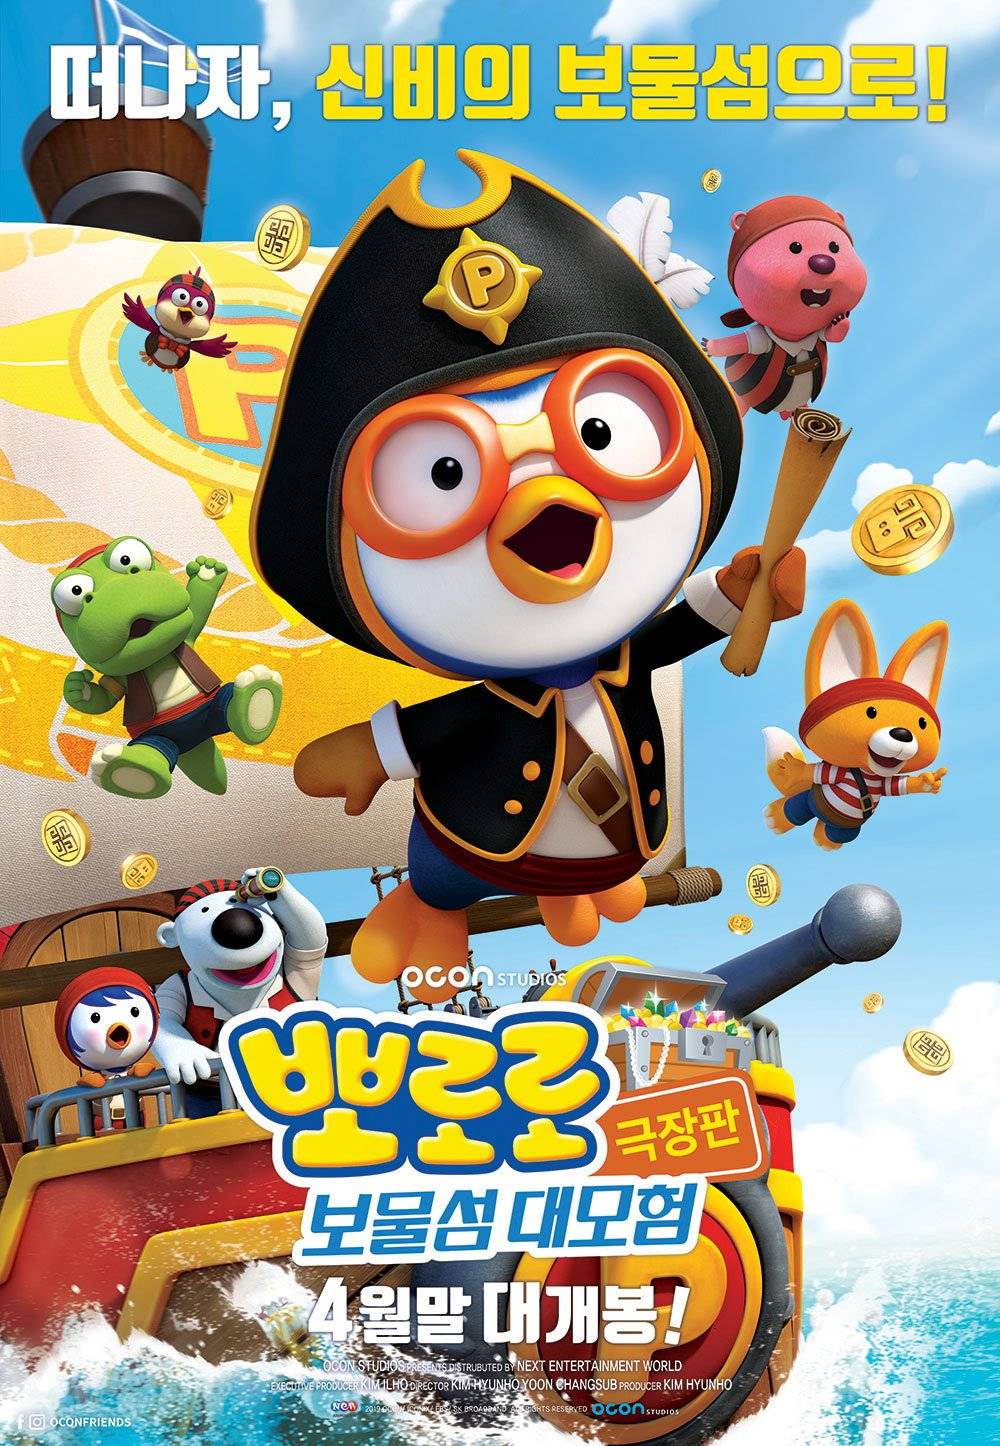 Photo] New Poster Added for the Upcoming Korean Animated Movie 'Pororo,  Treasure Island Adventure - Theater Version' @ HanCinema